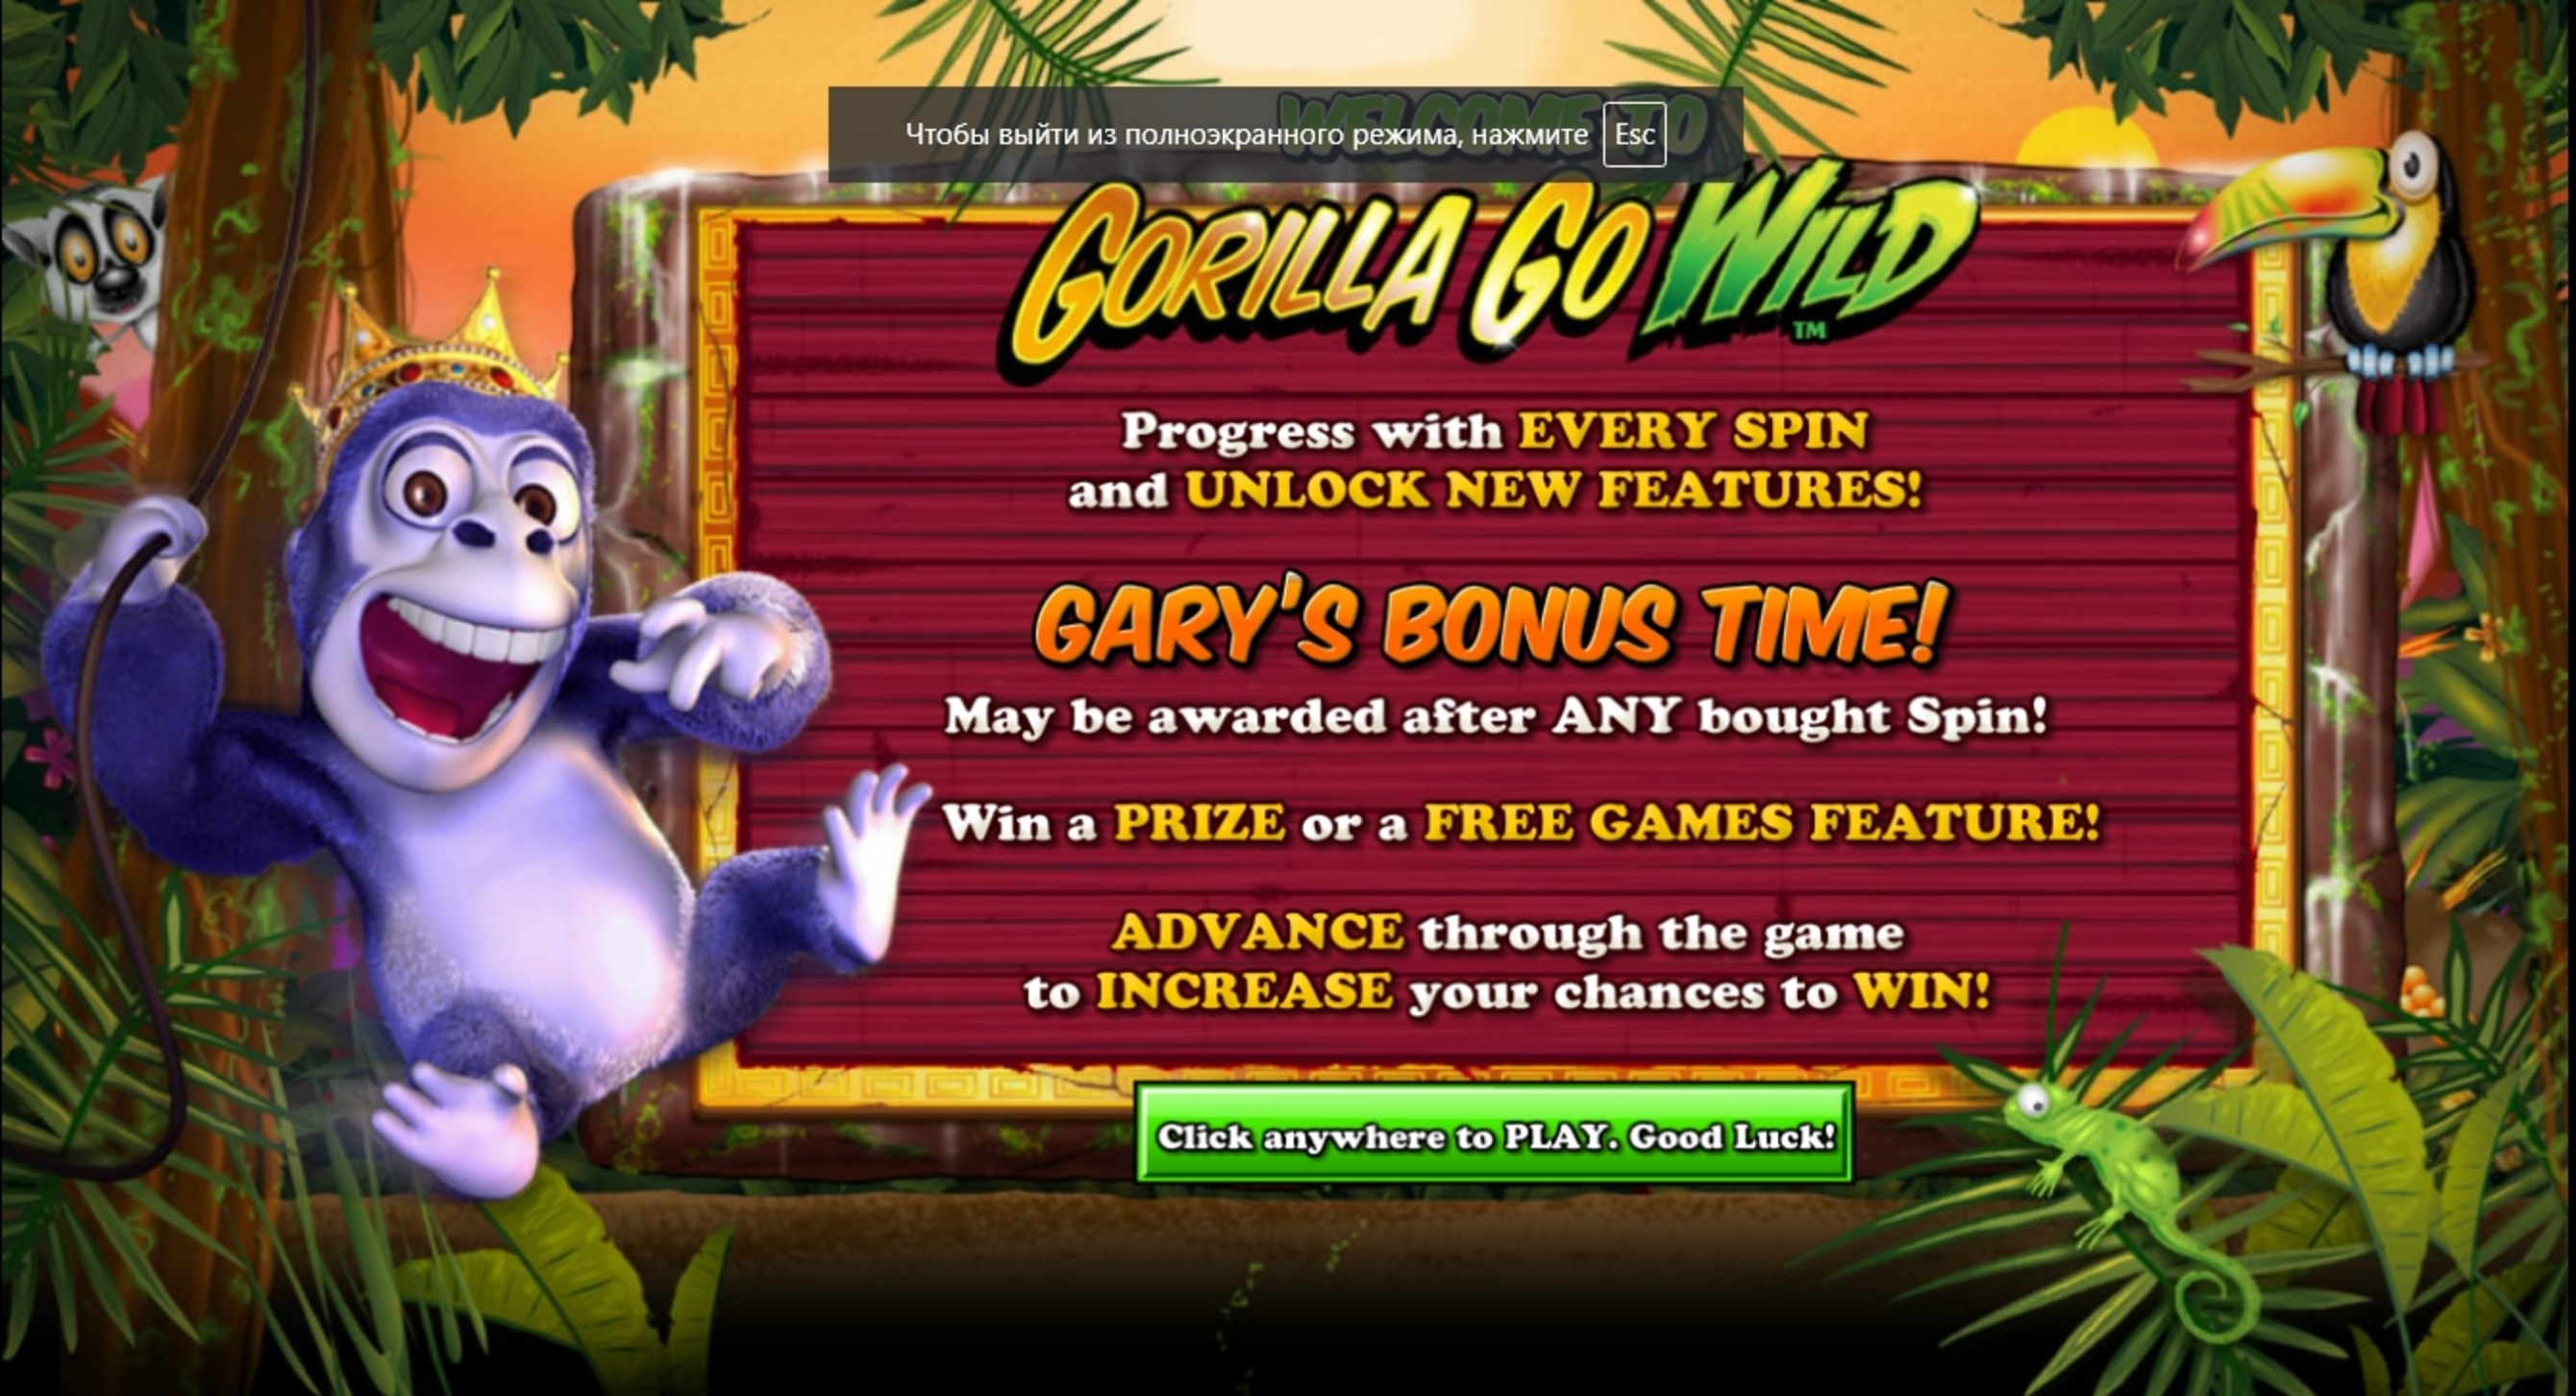 Play Gorilla Go Wild Free Casino Slot Game by NextGen Gaming